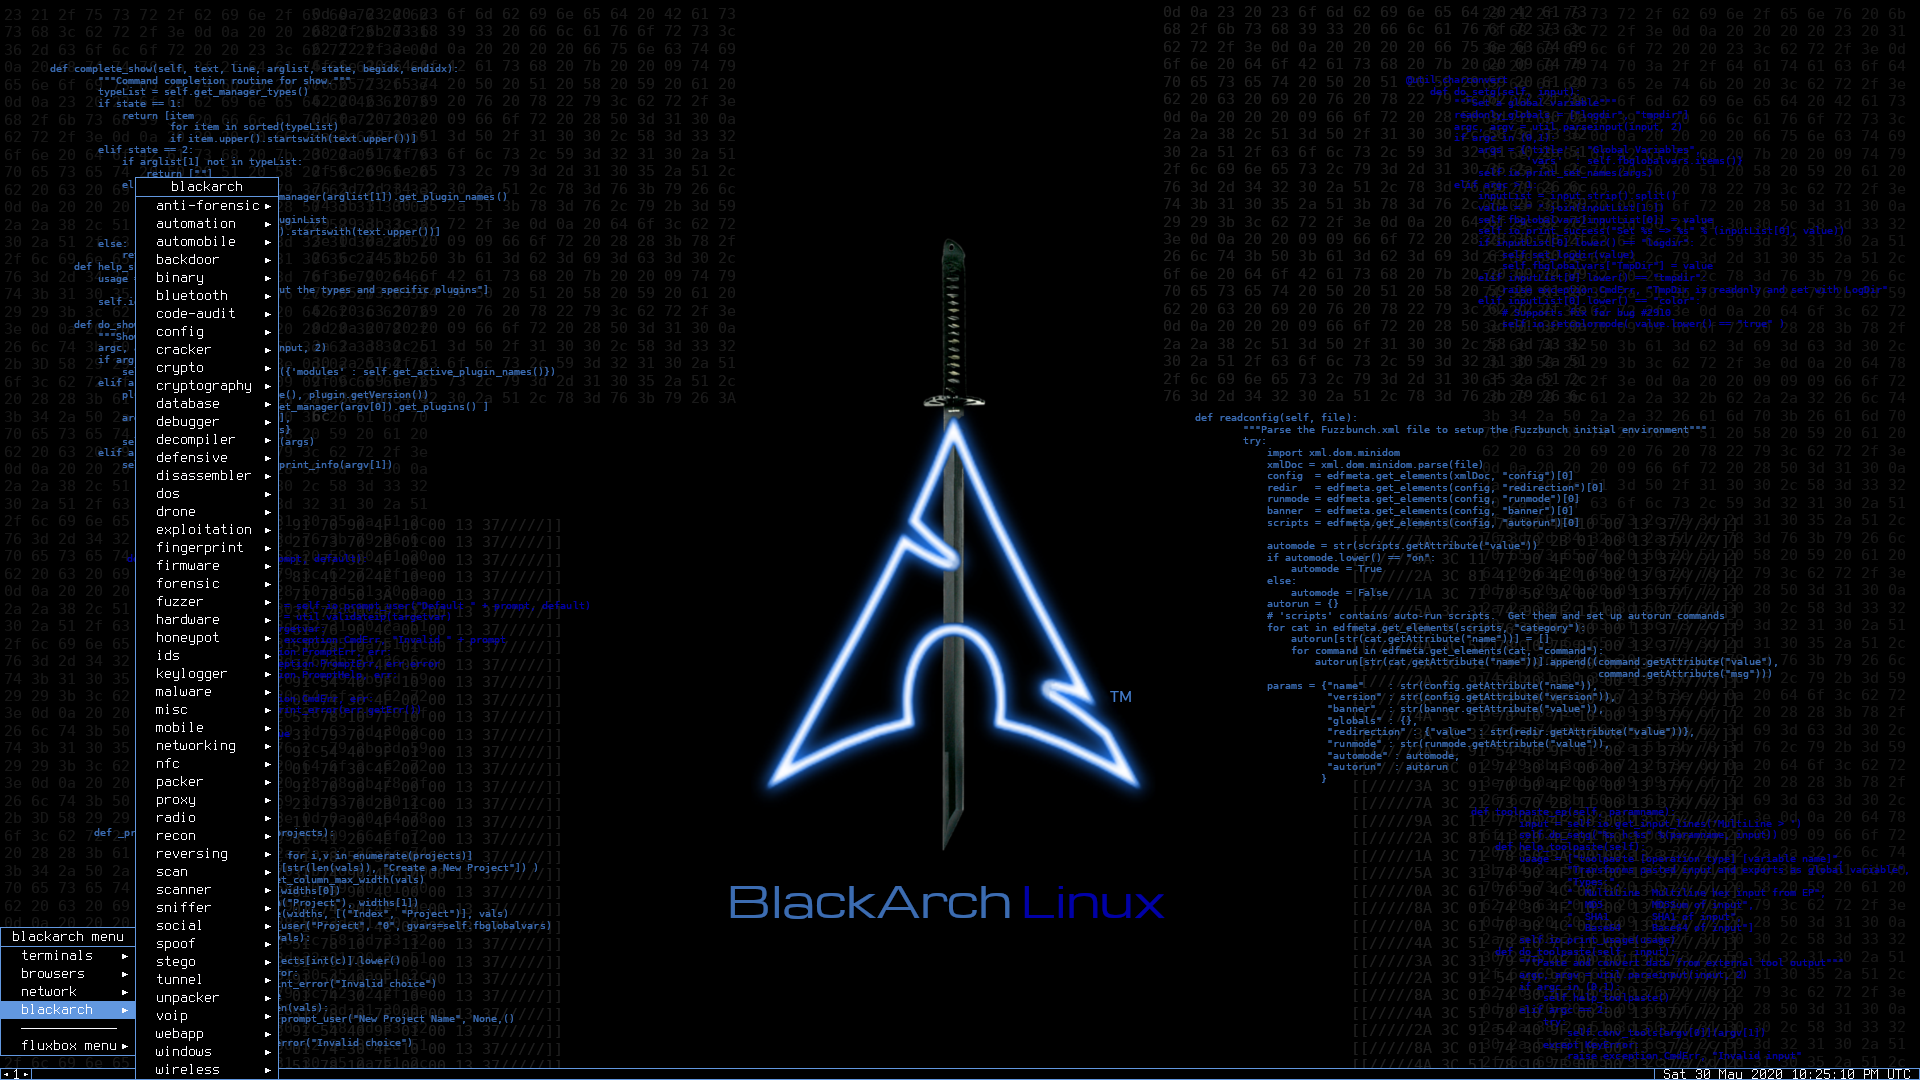 DistroWatch.com: BlackArch Linux